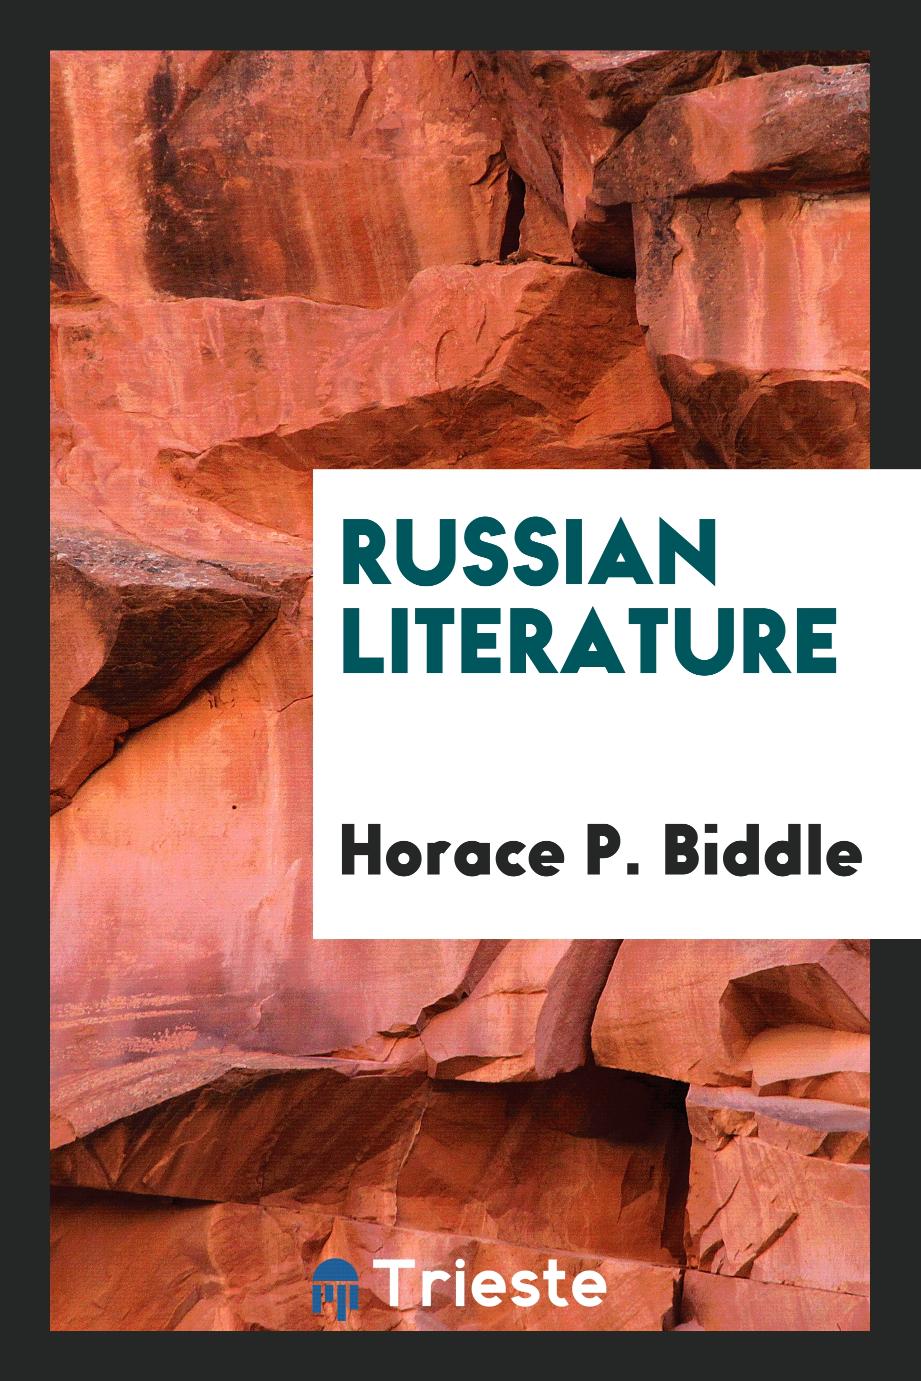 Russian Literature